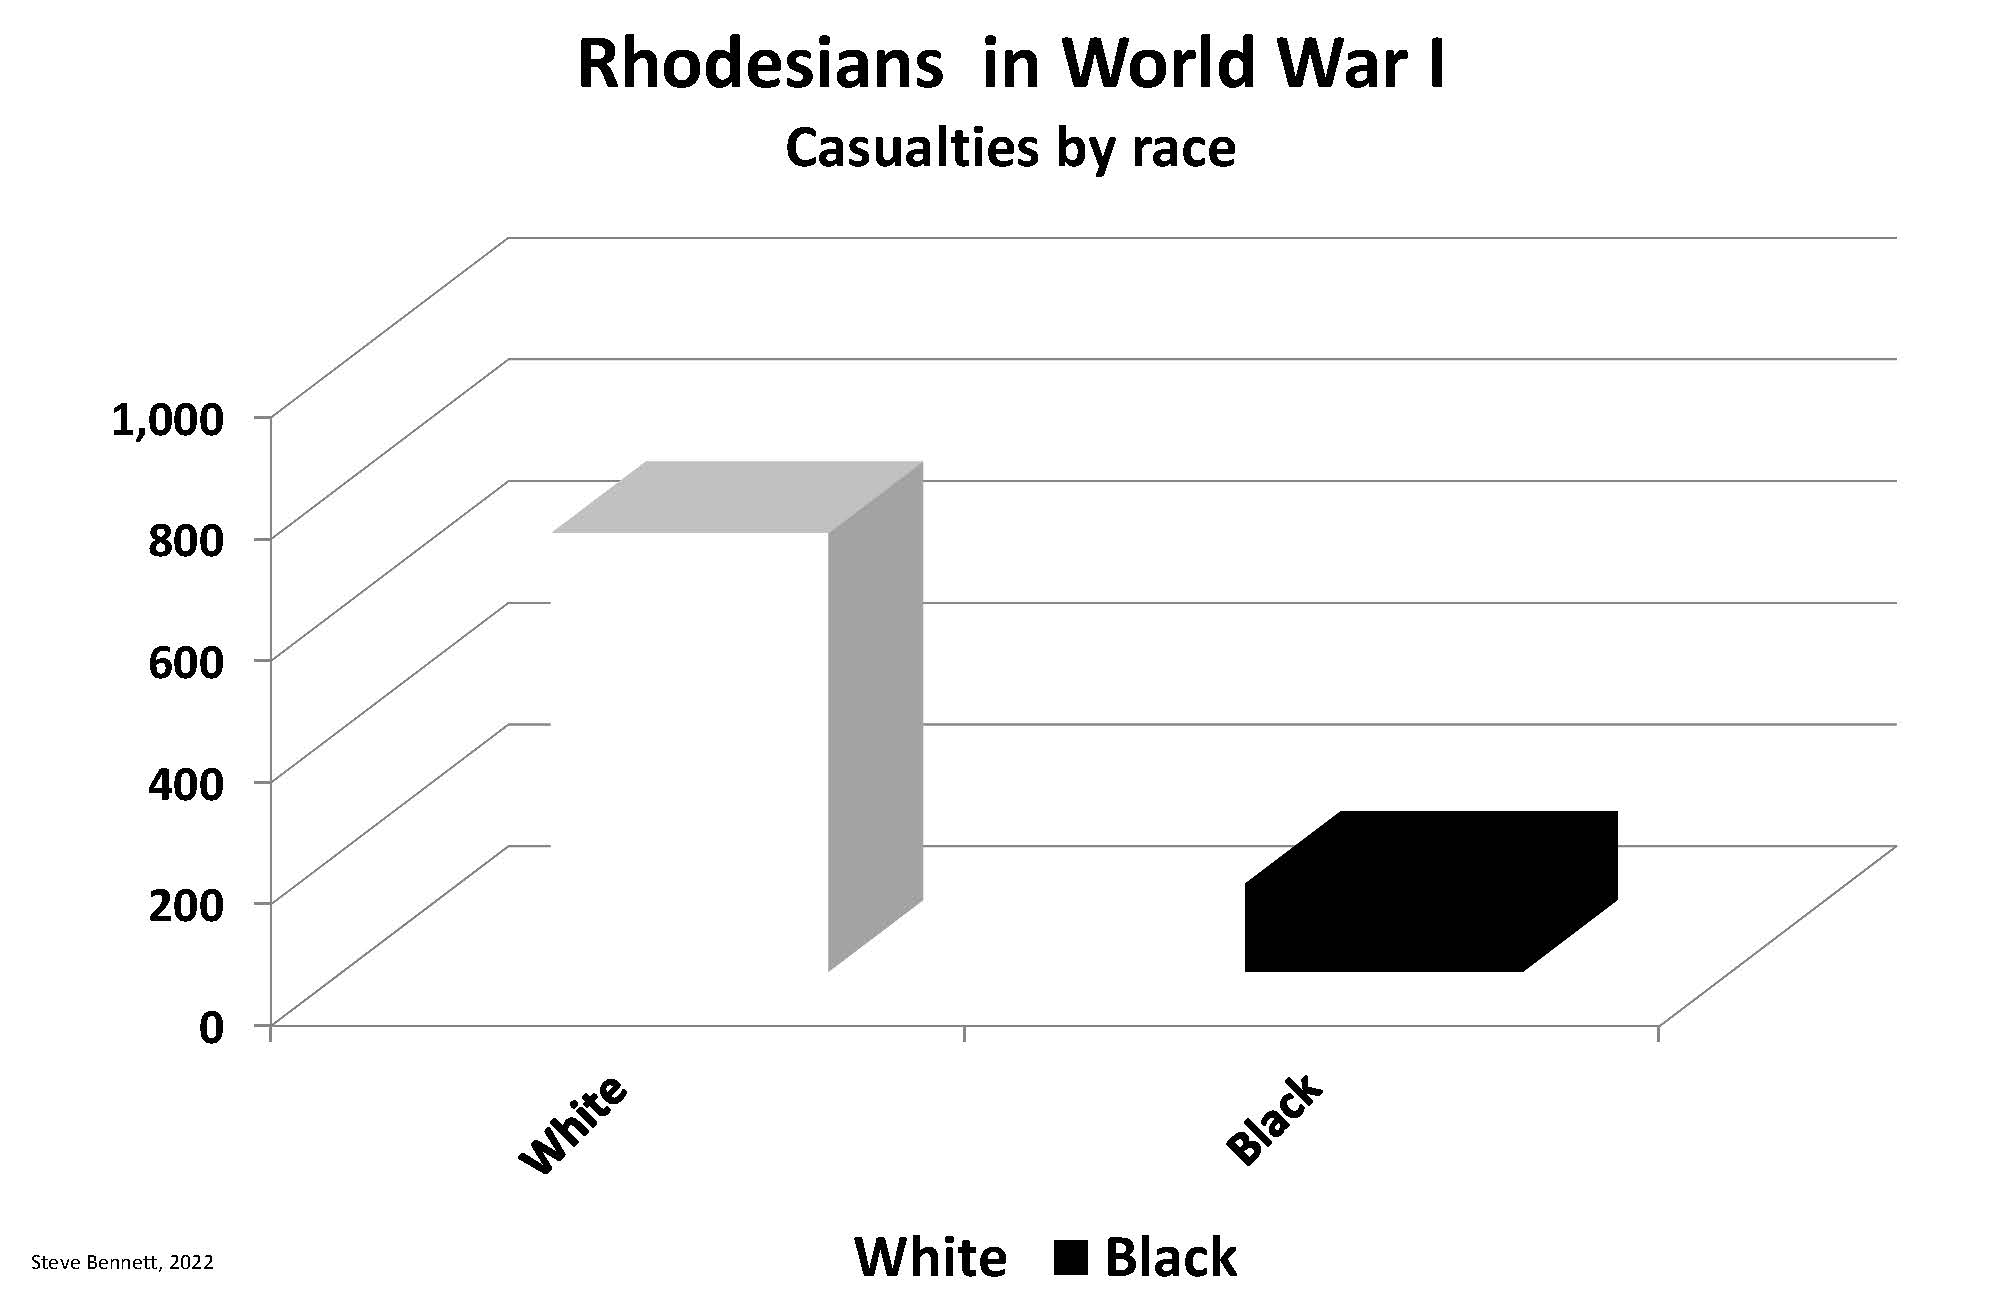 Chart showing Rhodesian casualties in World War I by race